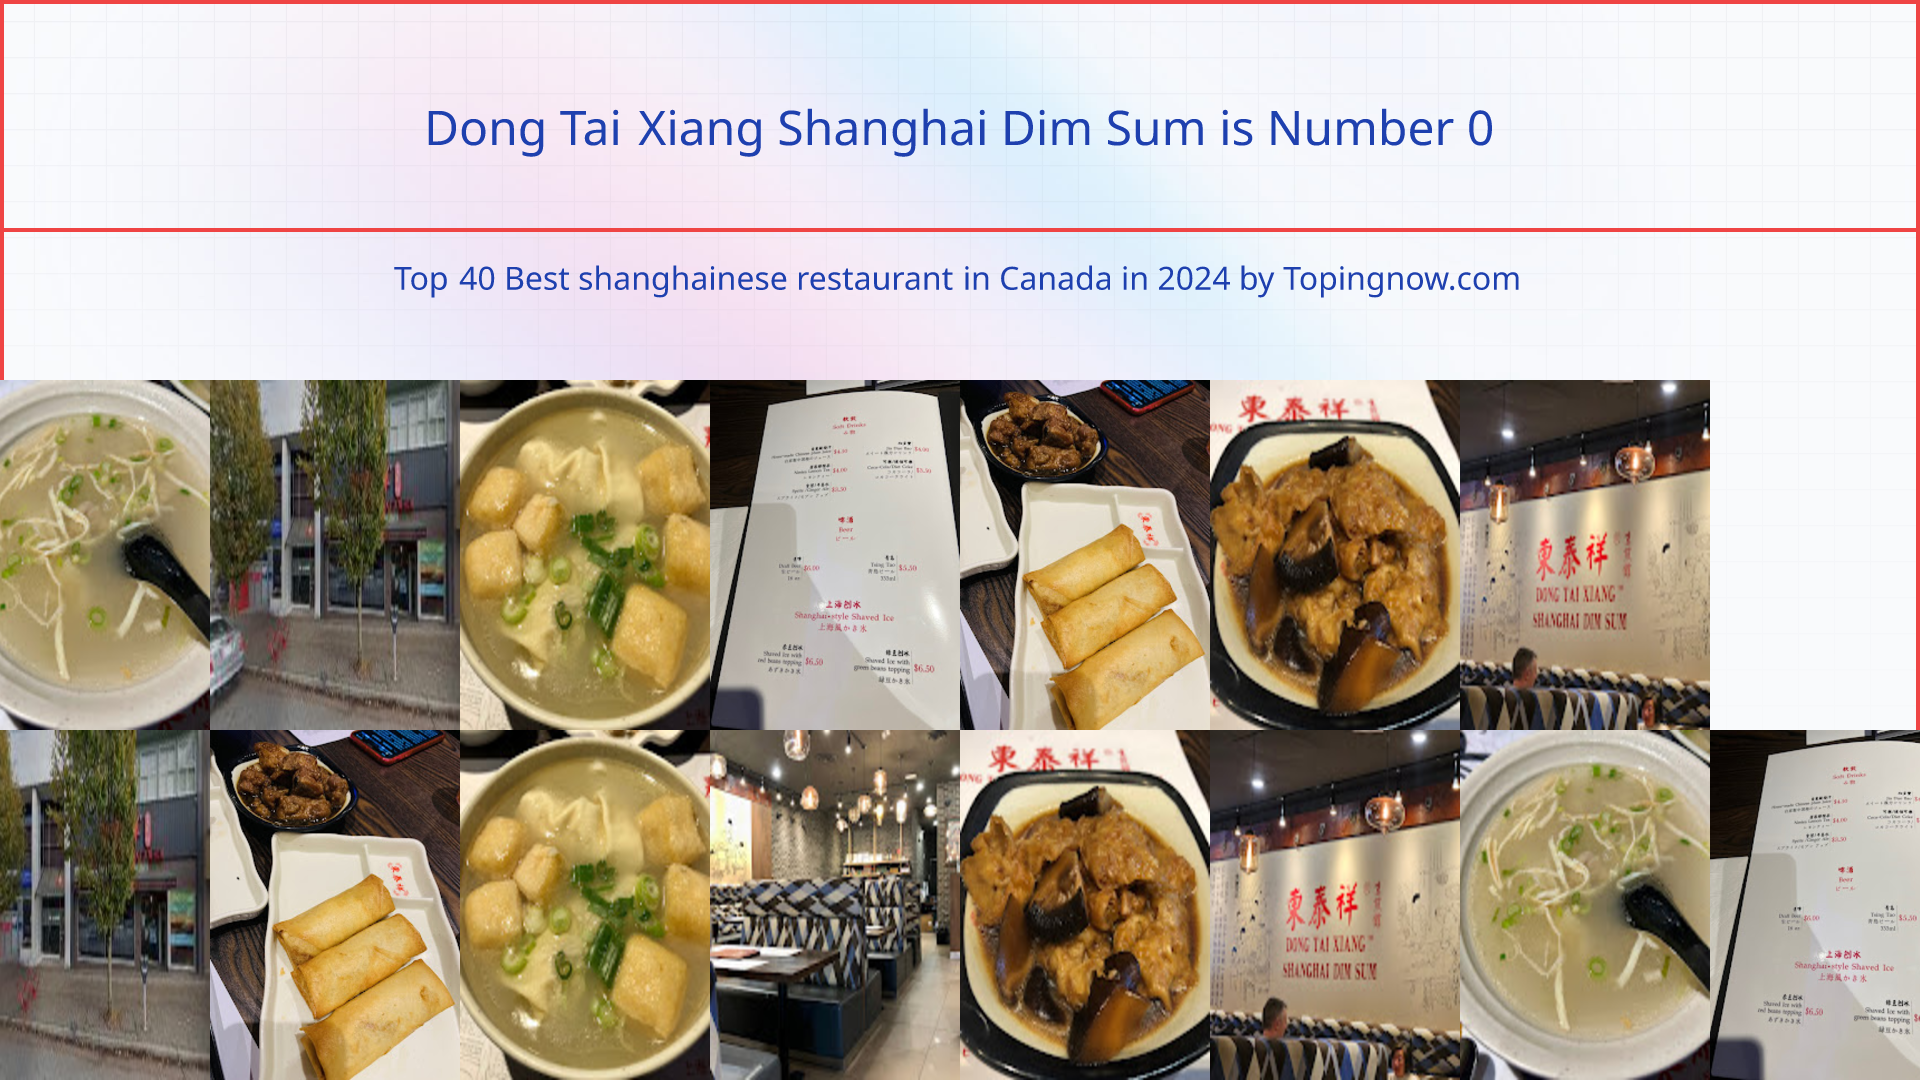 Dong Tai Xiang Shanghai Dim Sum: Top 40 Best shanghainese restaurant in Canada in 2024